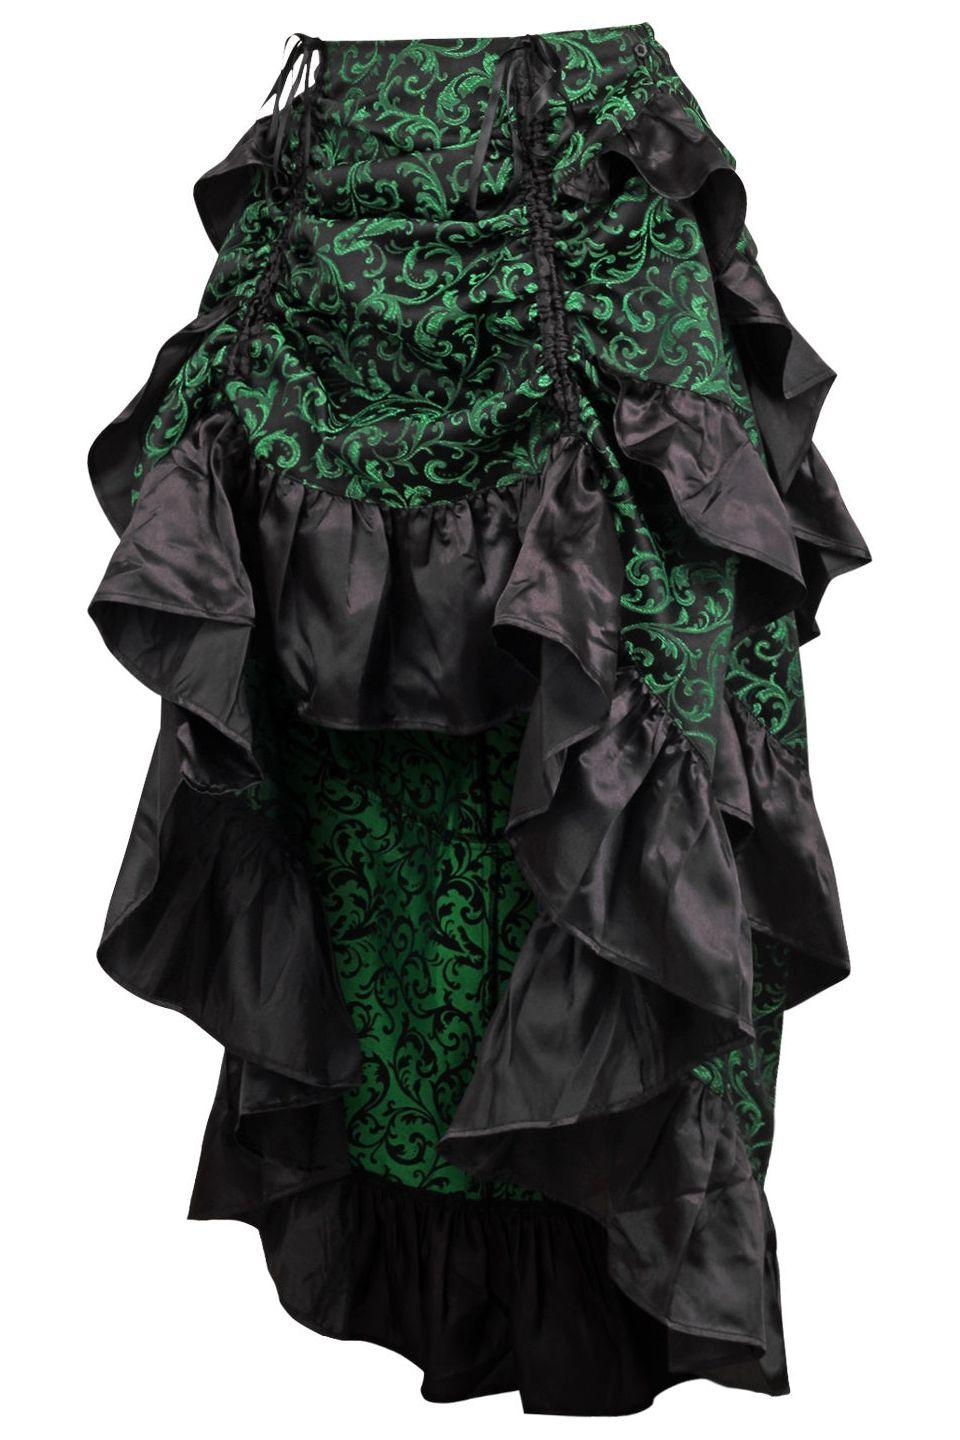 Green/Black Brocade Adjustable High Low Bustle Skirt - AMIClubwear